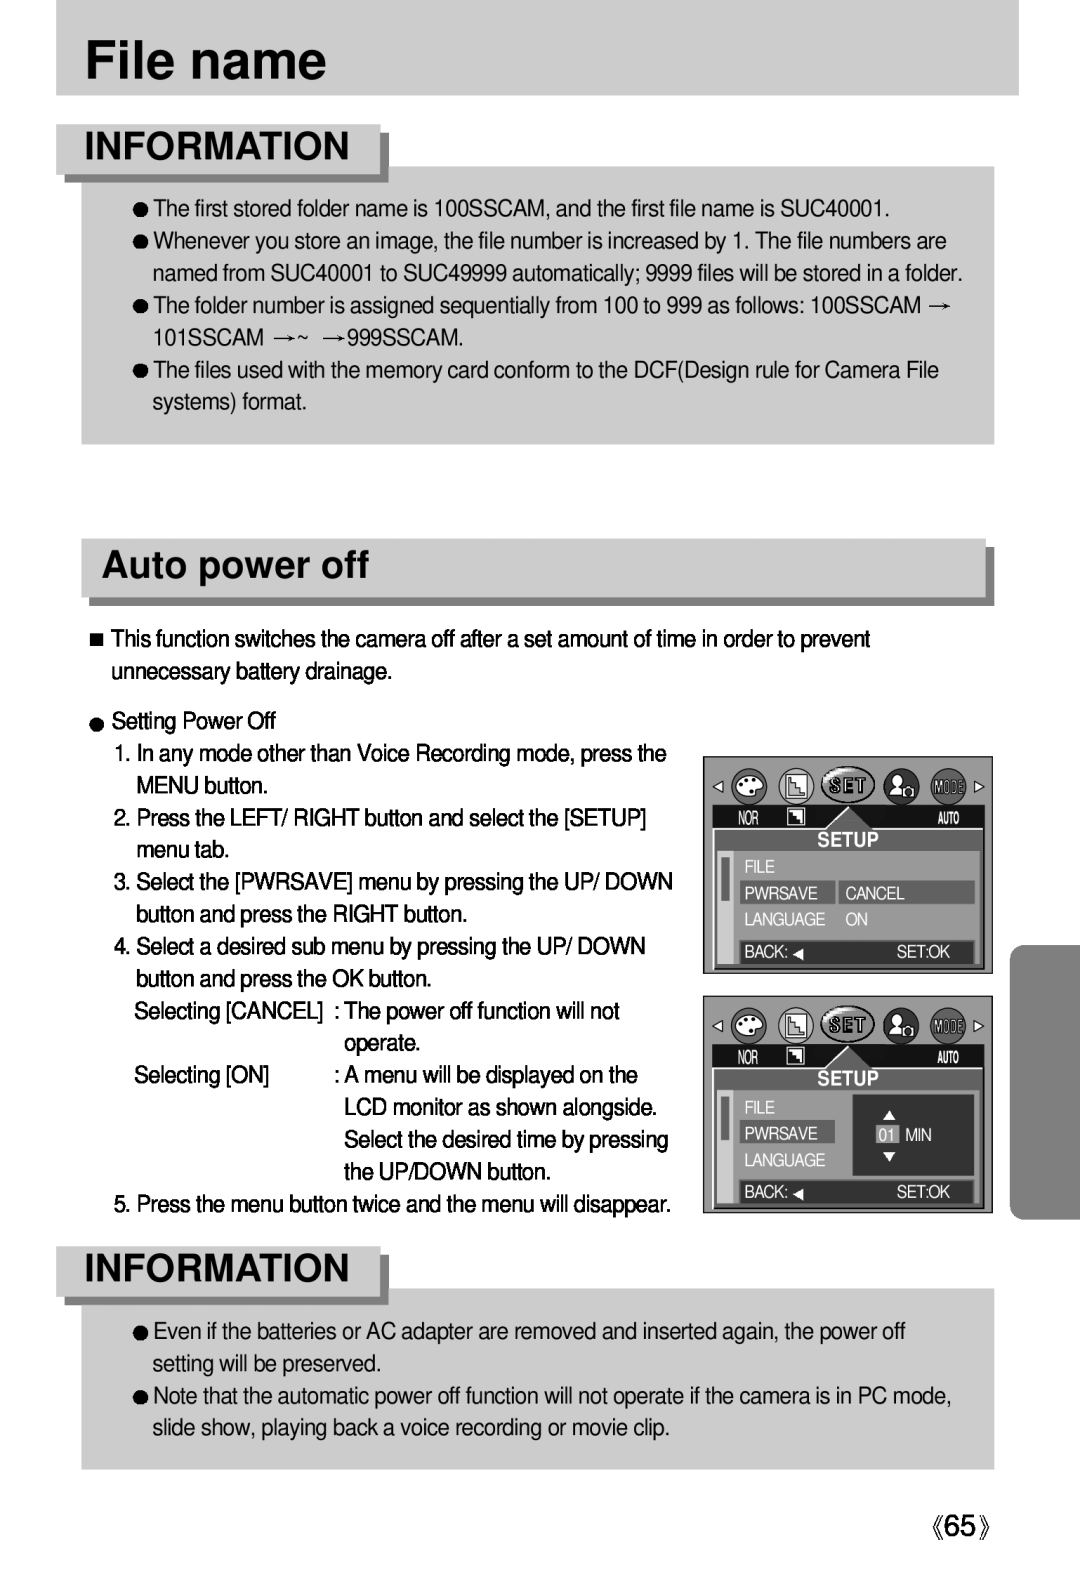 Samsung Digimax U-CA user manual File name, Auto power off, Information 